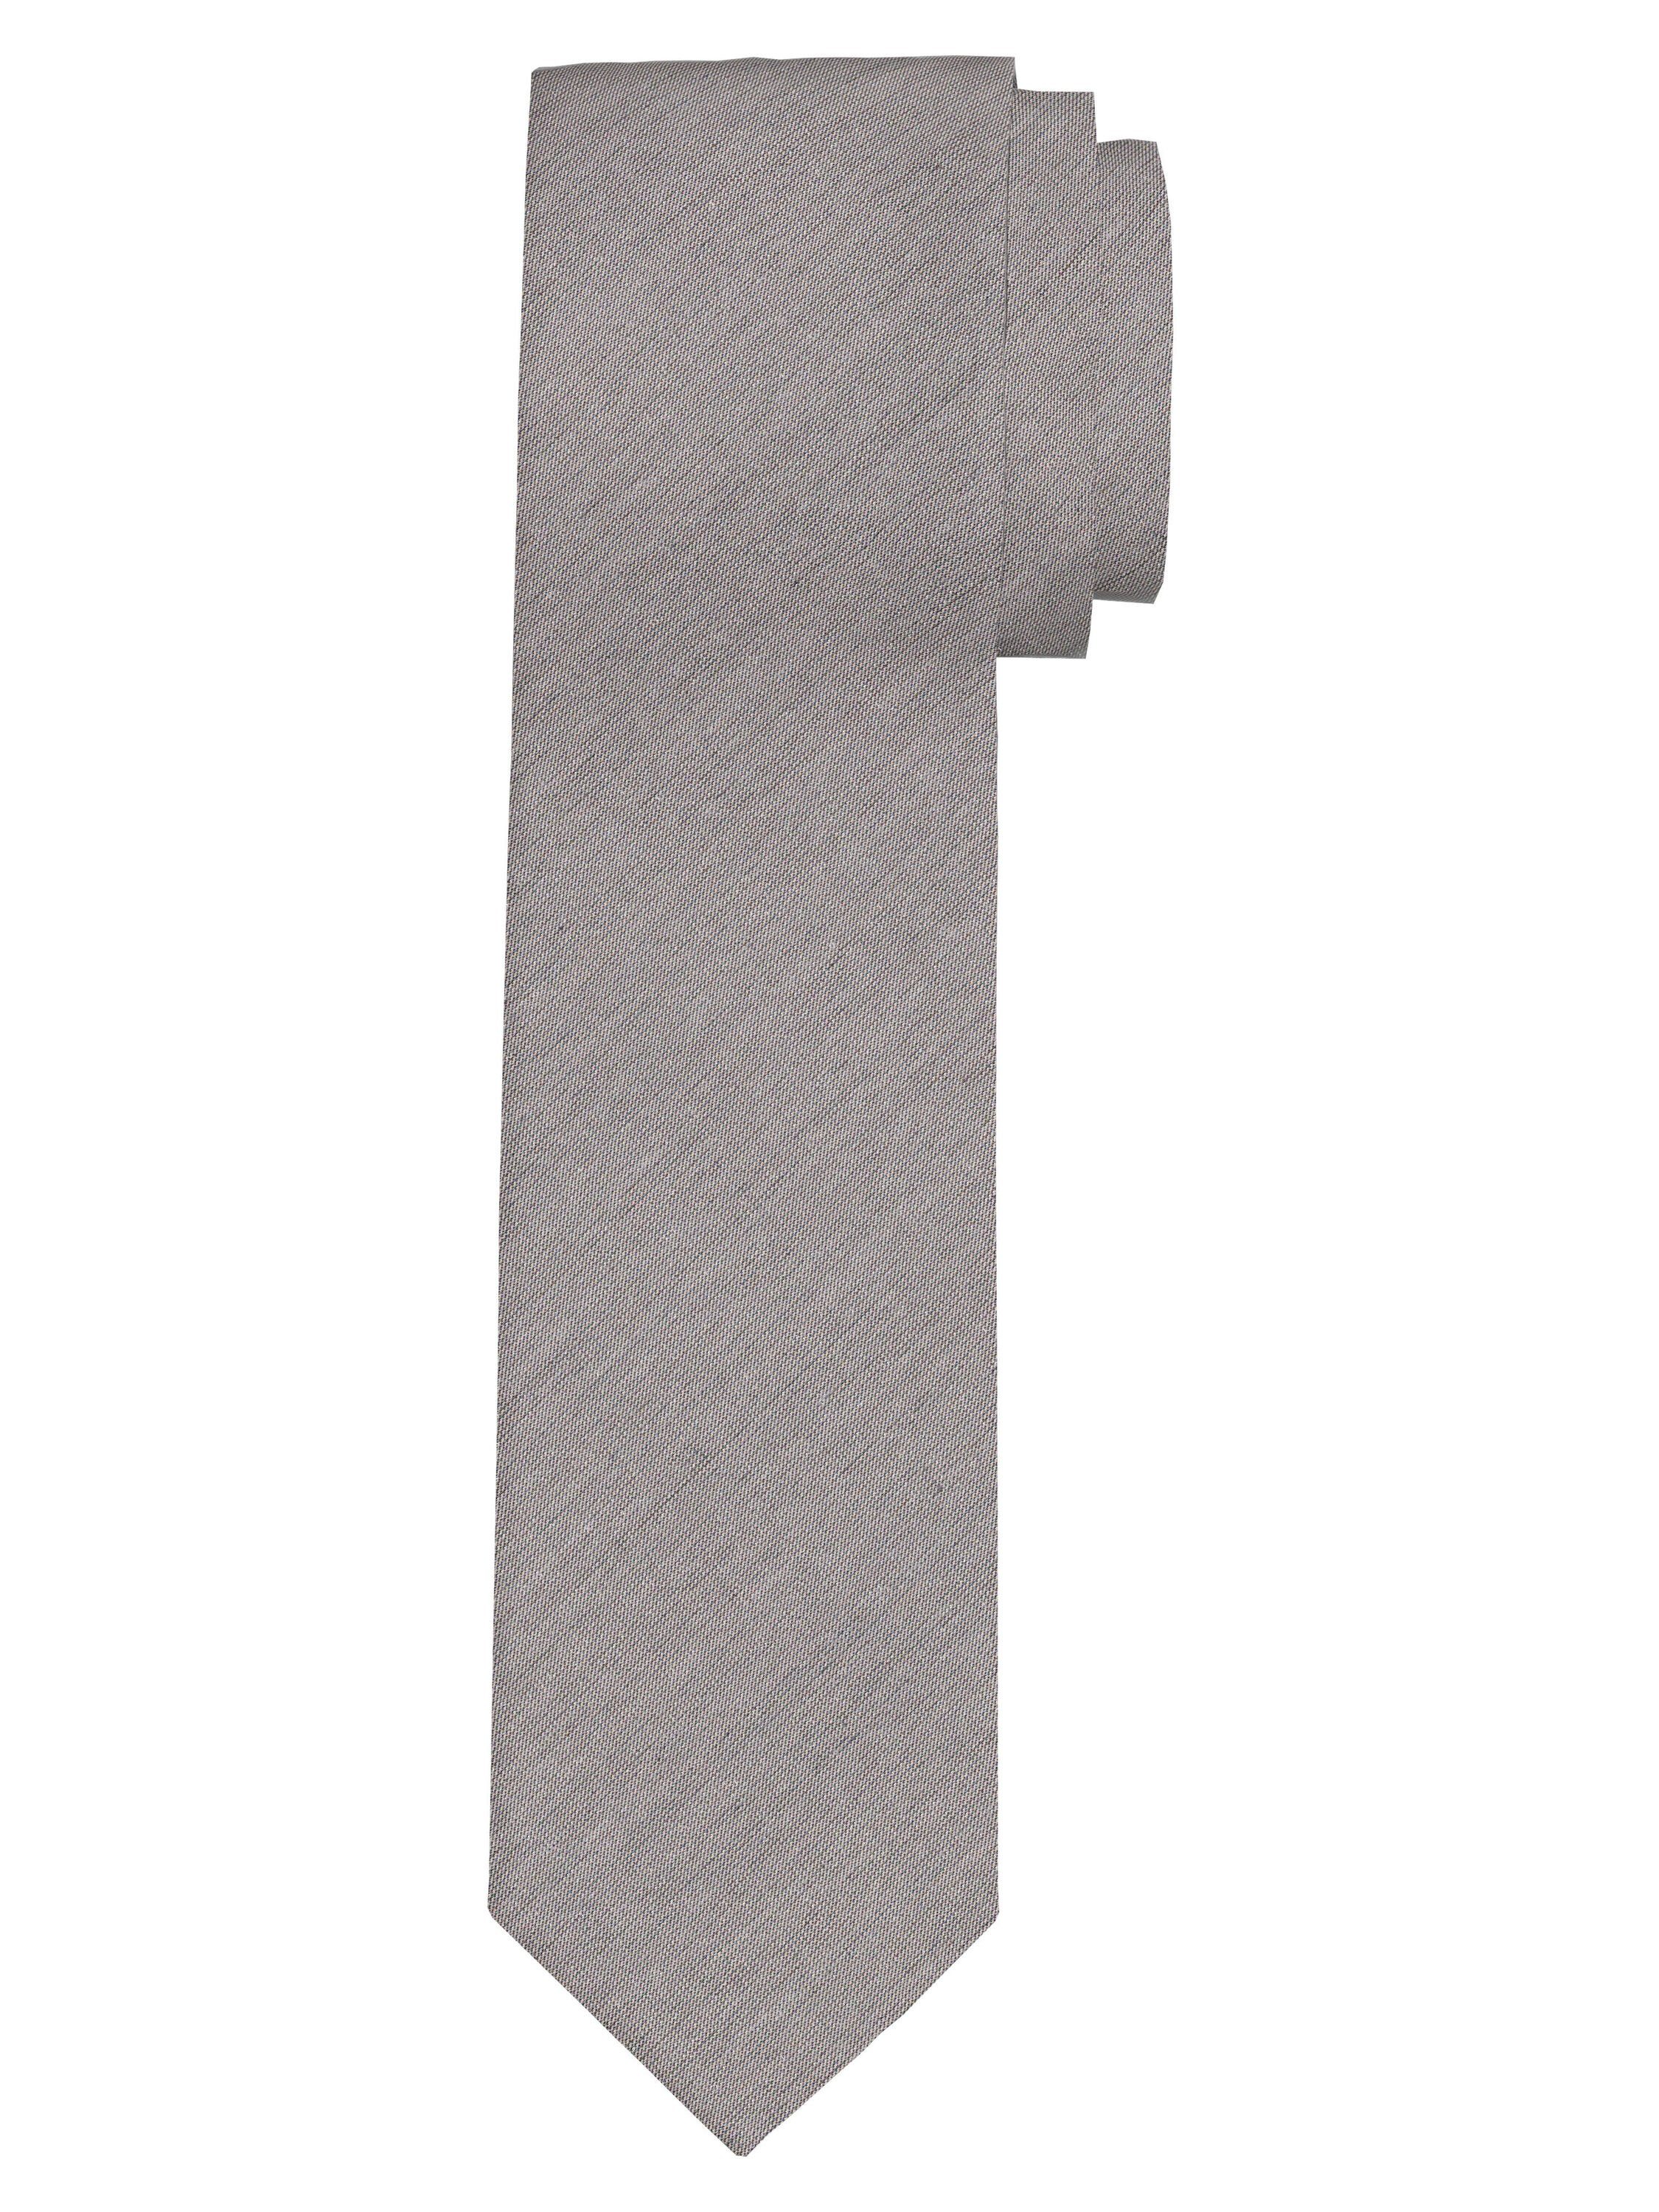 Krawatte OLYMP Krawatte Vielfältig im kombinierbar eleganten Style,